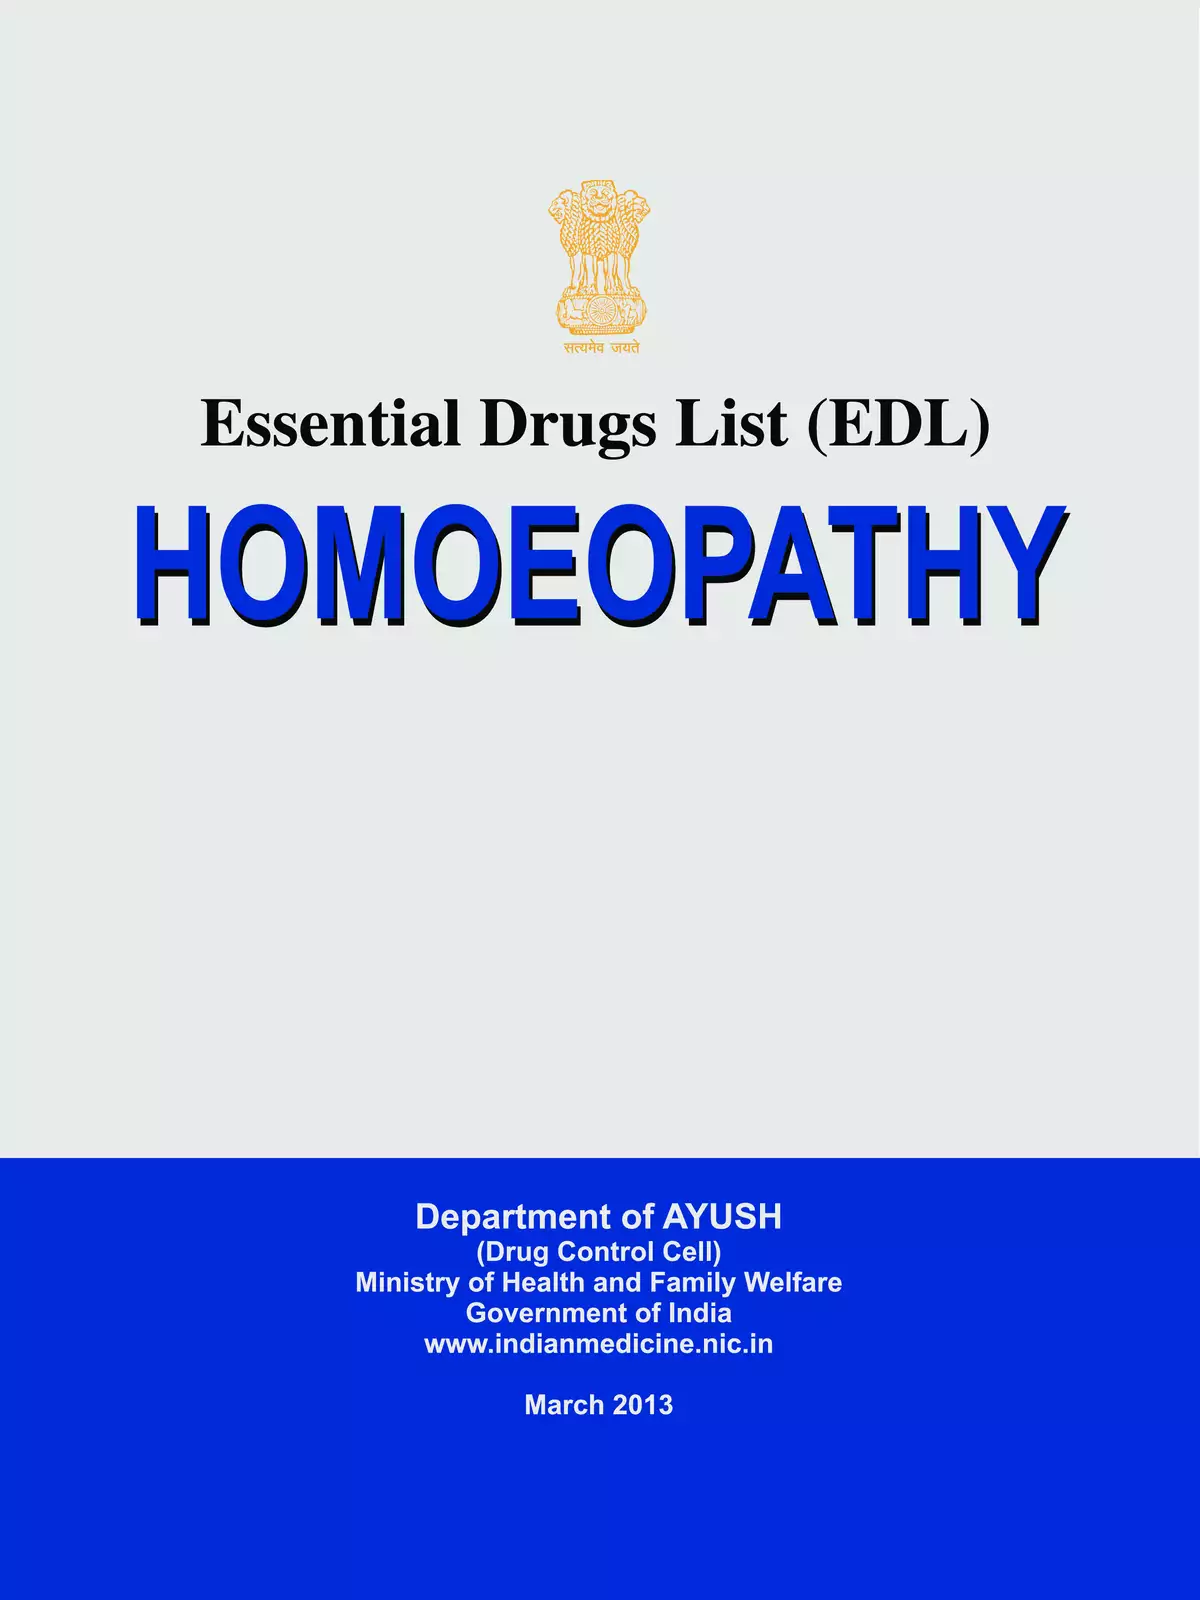 Homeopathy Medicine List